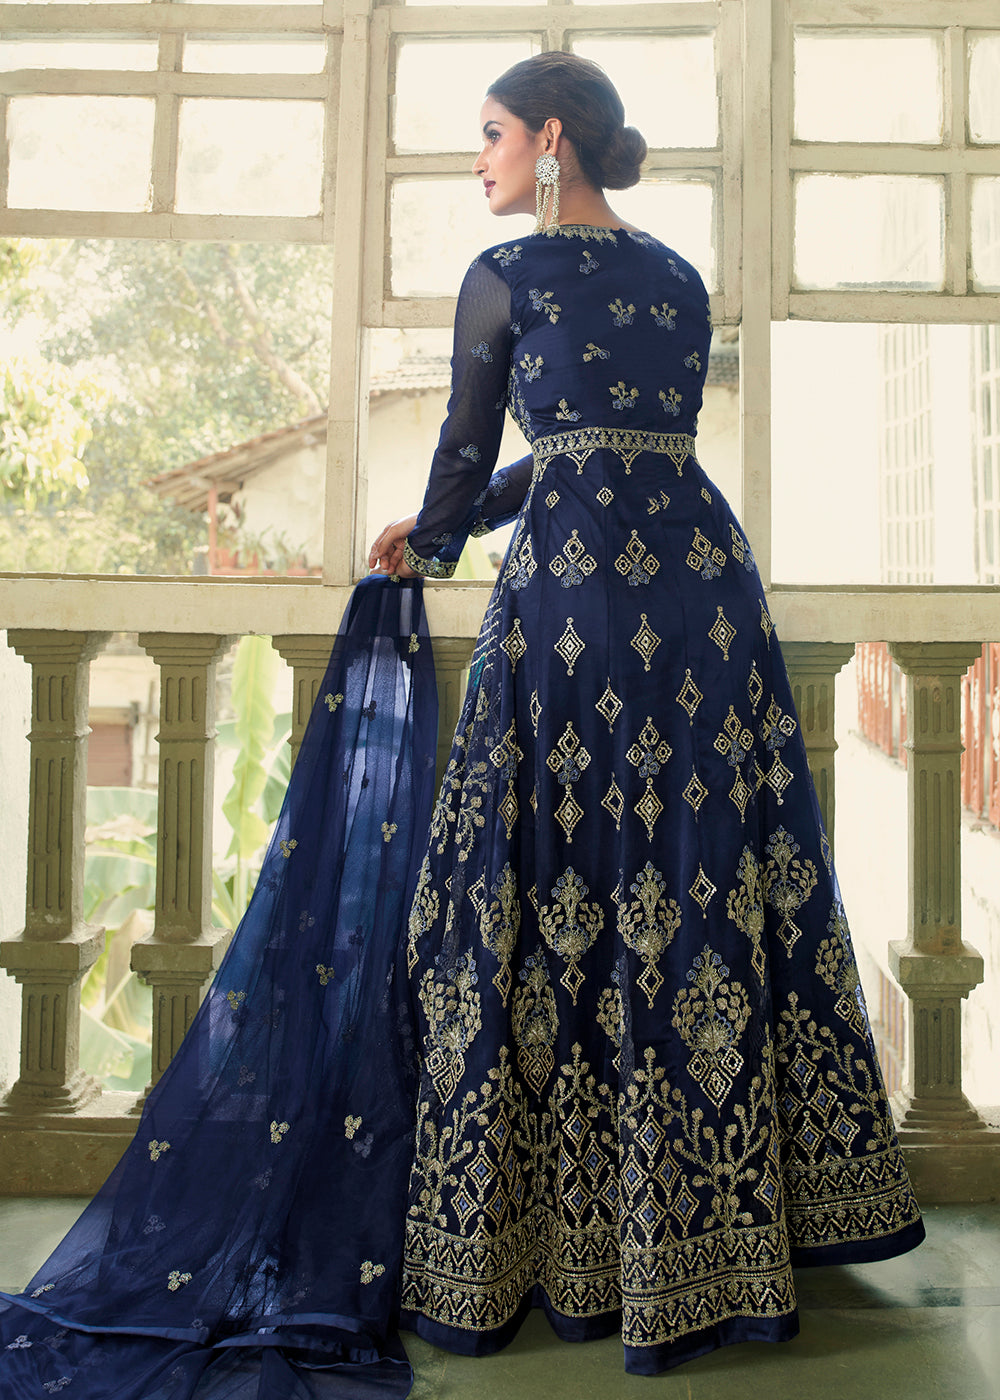 Buy Now Slit Style Ravishing Blue Zari Embroidered Party Festive Anarkali Suit Online in USA, UK, Australia, New Zealand, Canada & Worldwide at Empress Clothing. 